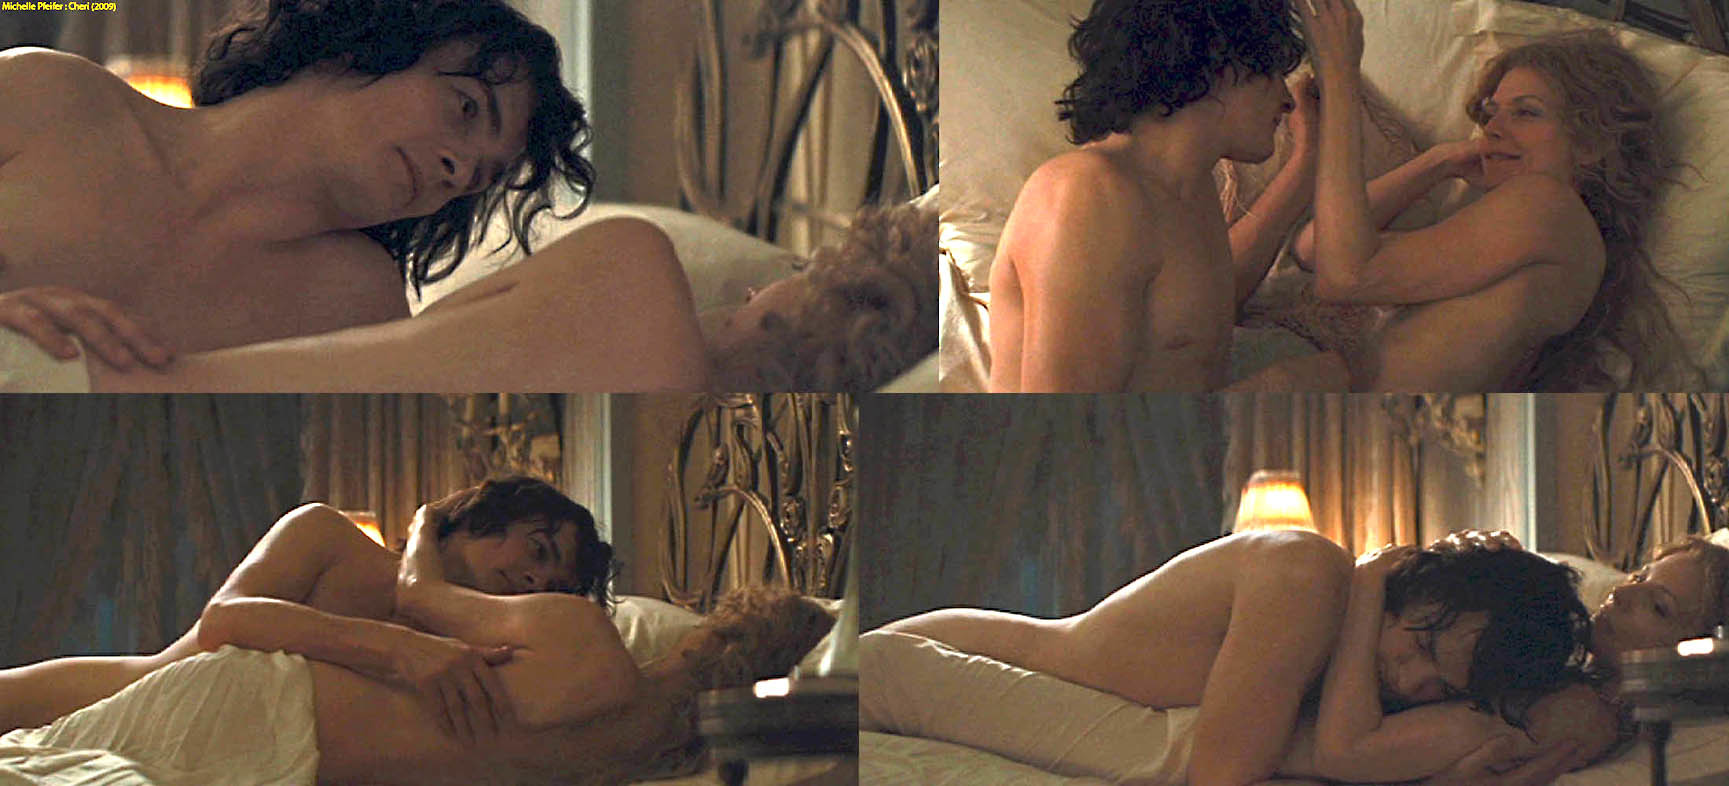 Michelle phifer nude - 🧡 Michelle Pfeiffer Nude Playboy - Porn Photos Sex ...